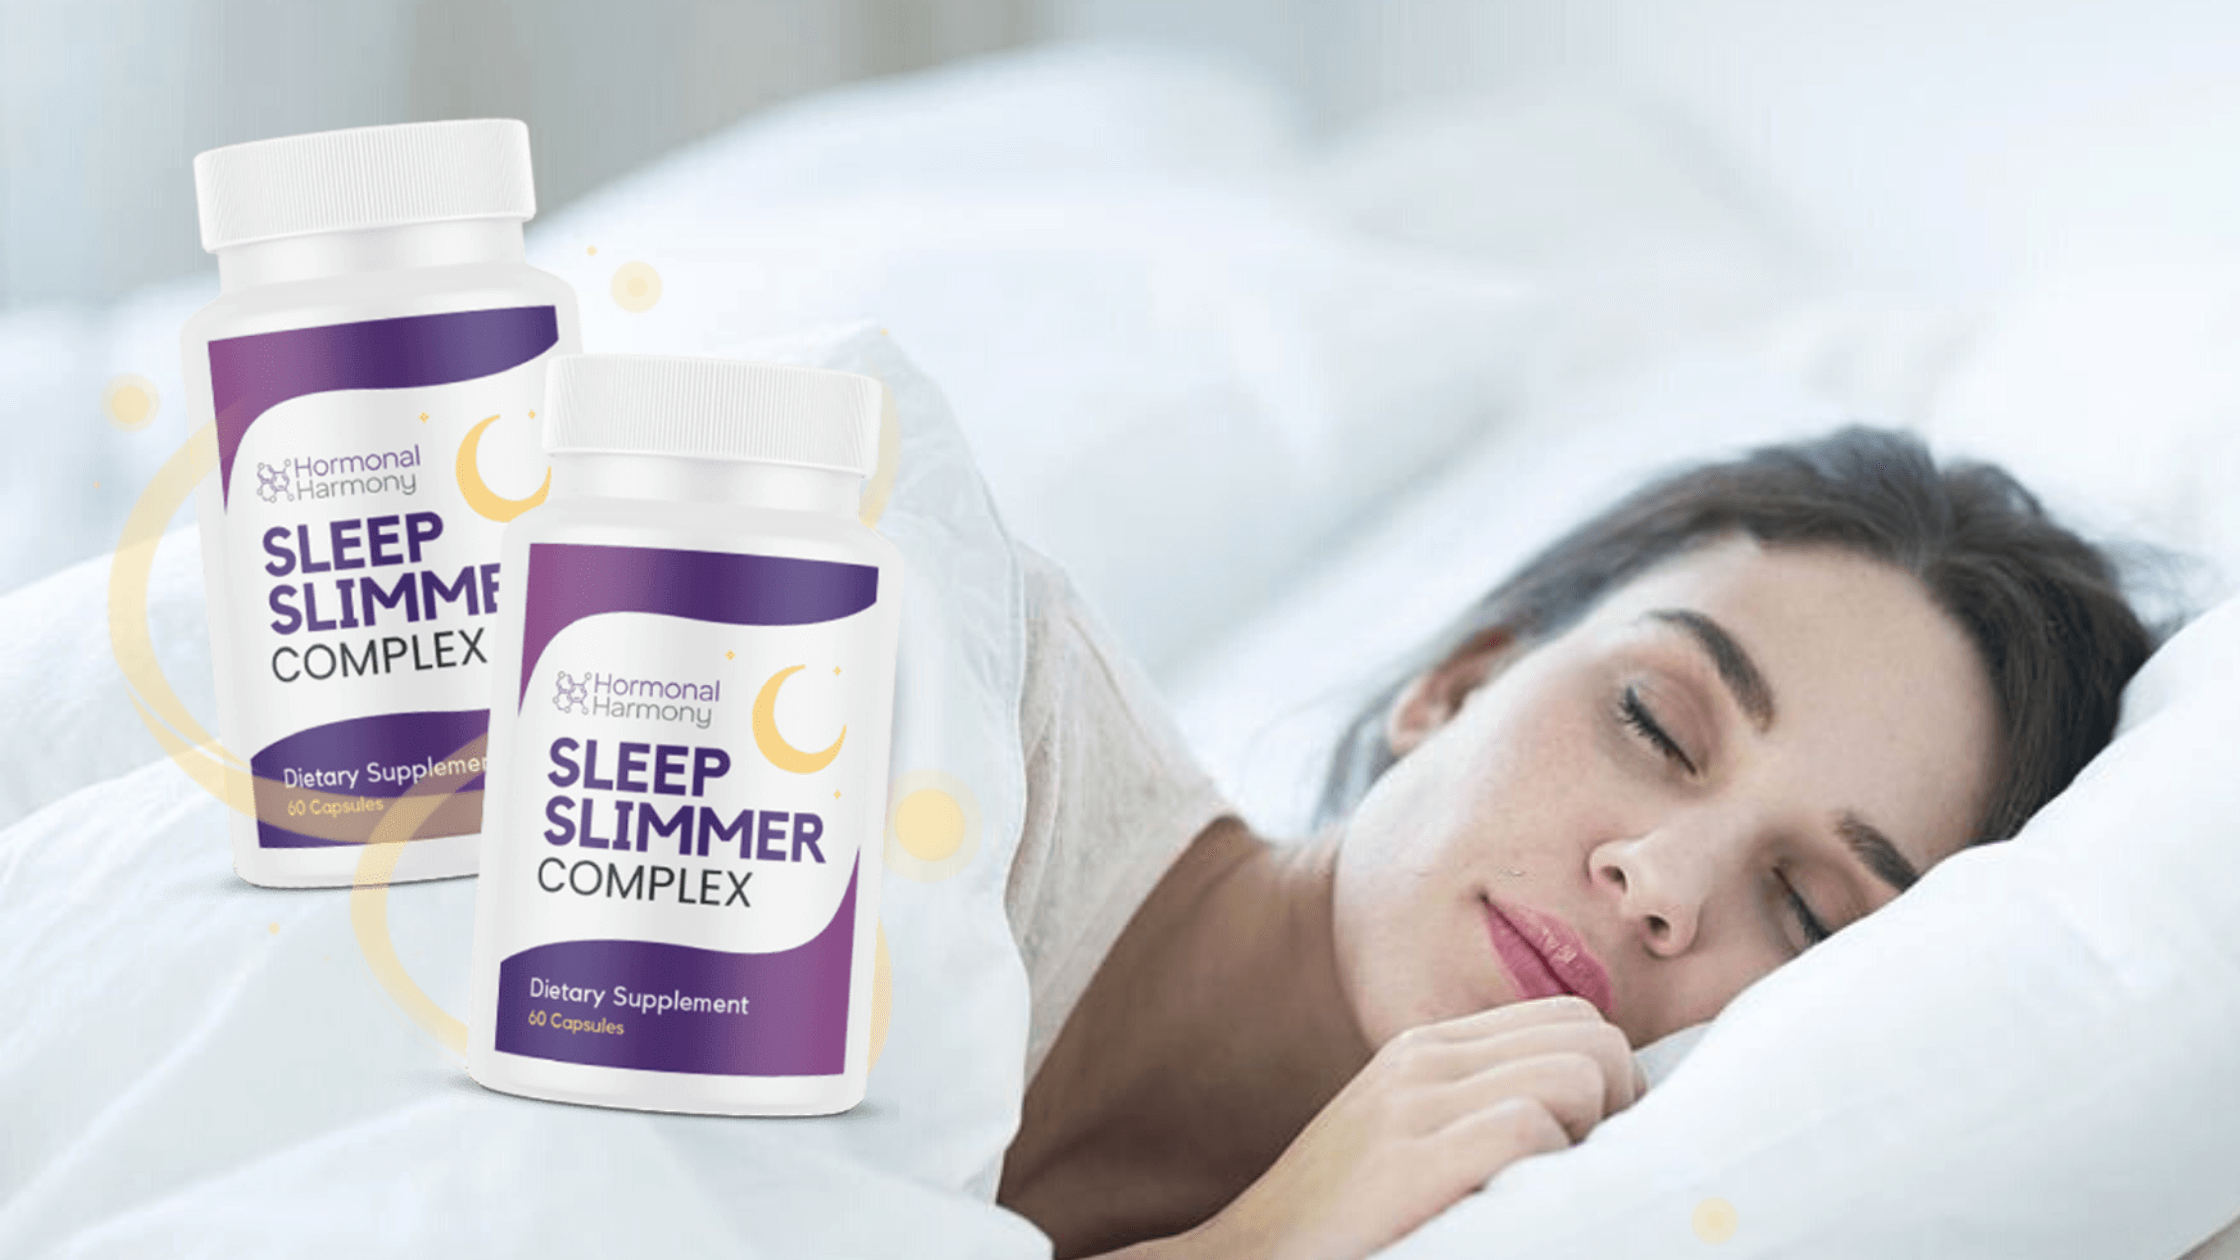 Sleep Slimmer Complex Weight Loss Supplement